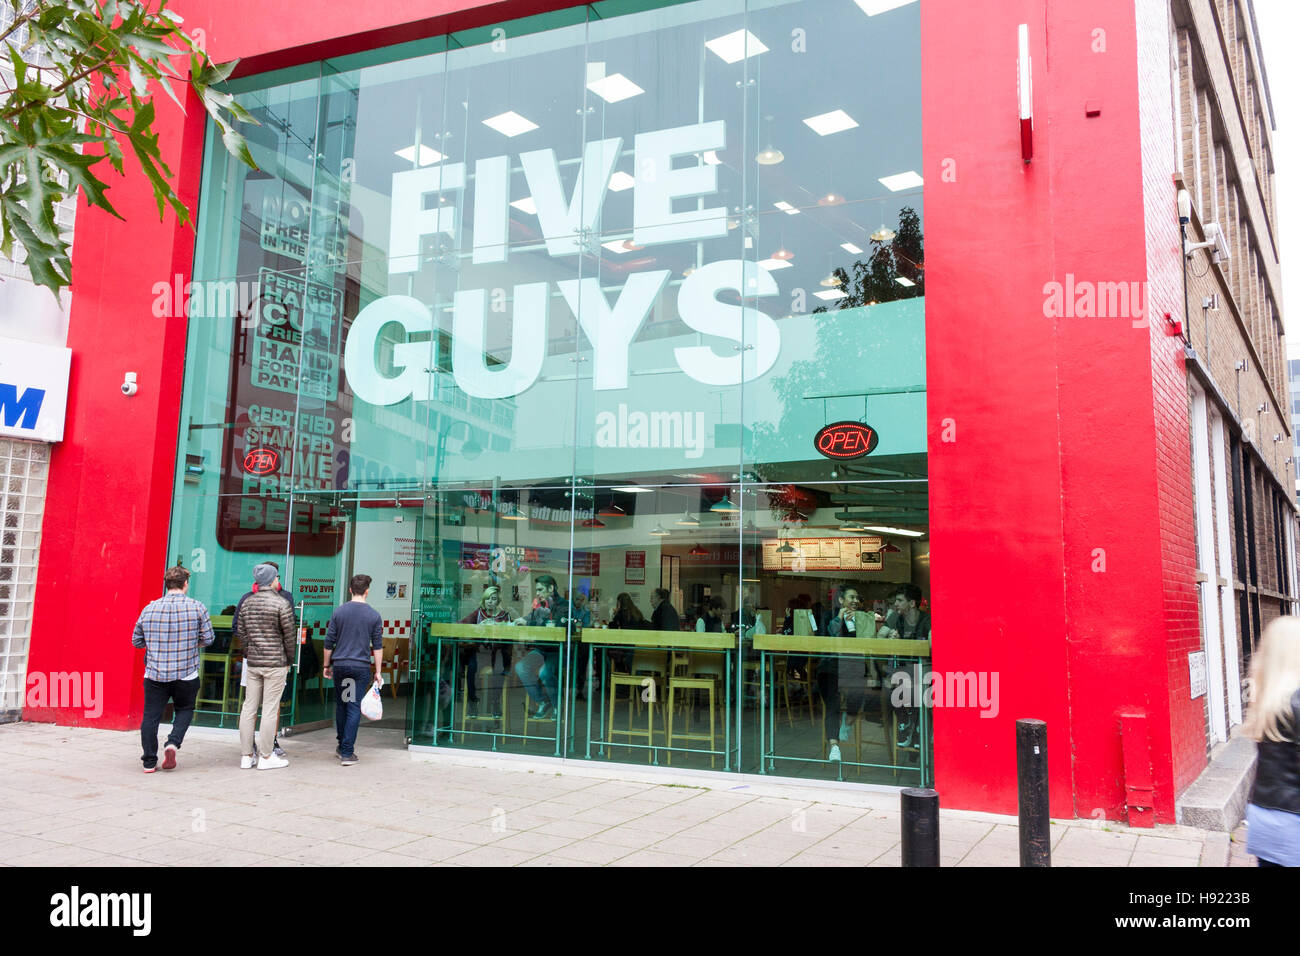 Exterior view of Five Guys burger restaurant chain branch in Uxbridge, Hillingdon, Greater London, UK Stock Photo